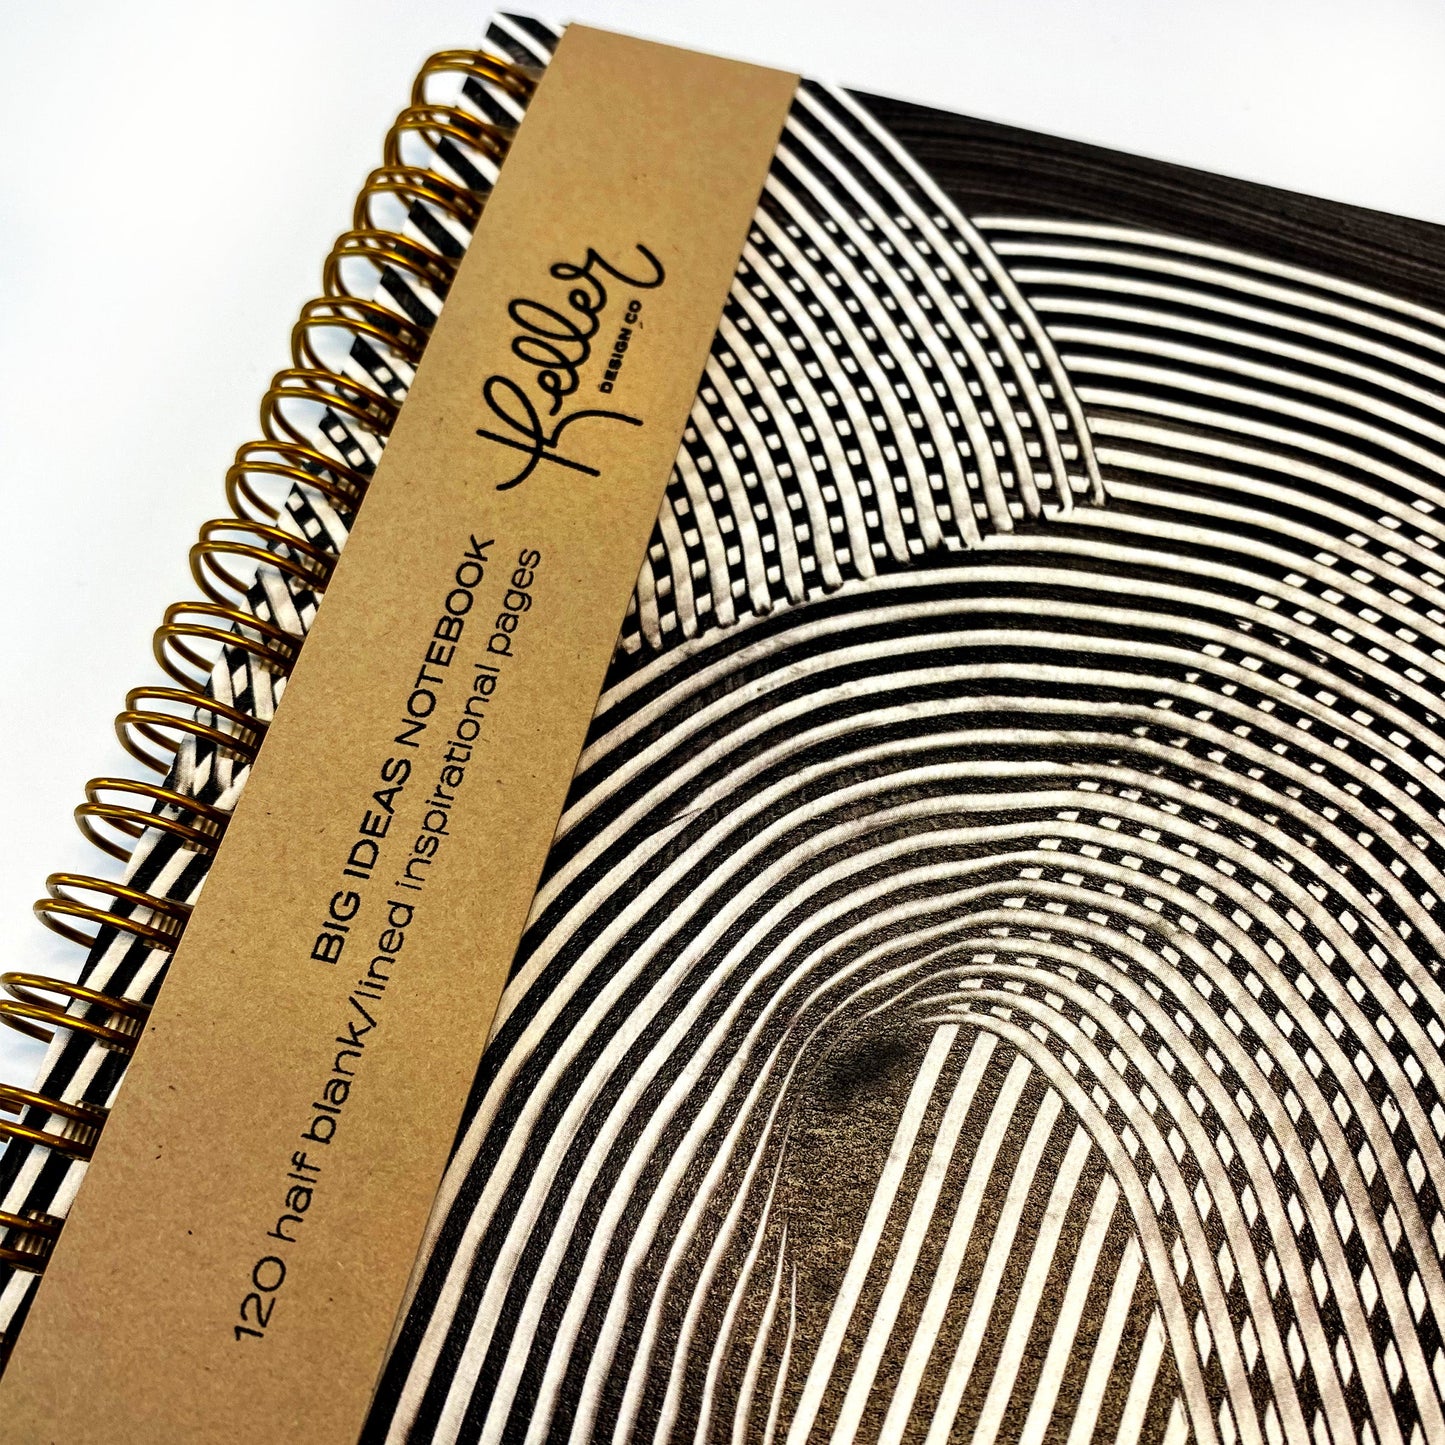 Curves Ahead: Black No.2-5.5”x8”- Big Ideas Spiral Bound Notebook-Wholesale